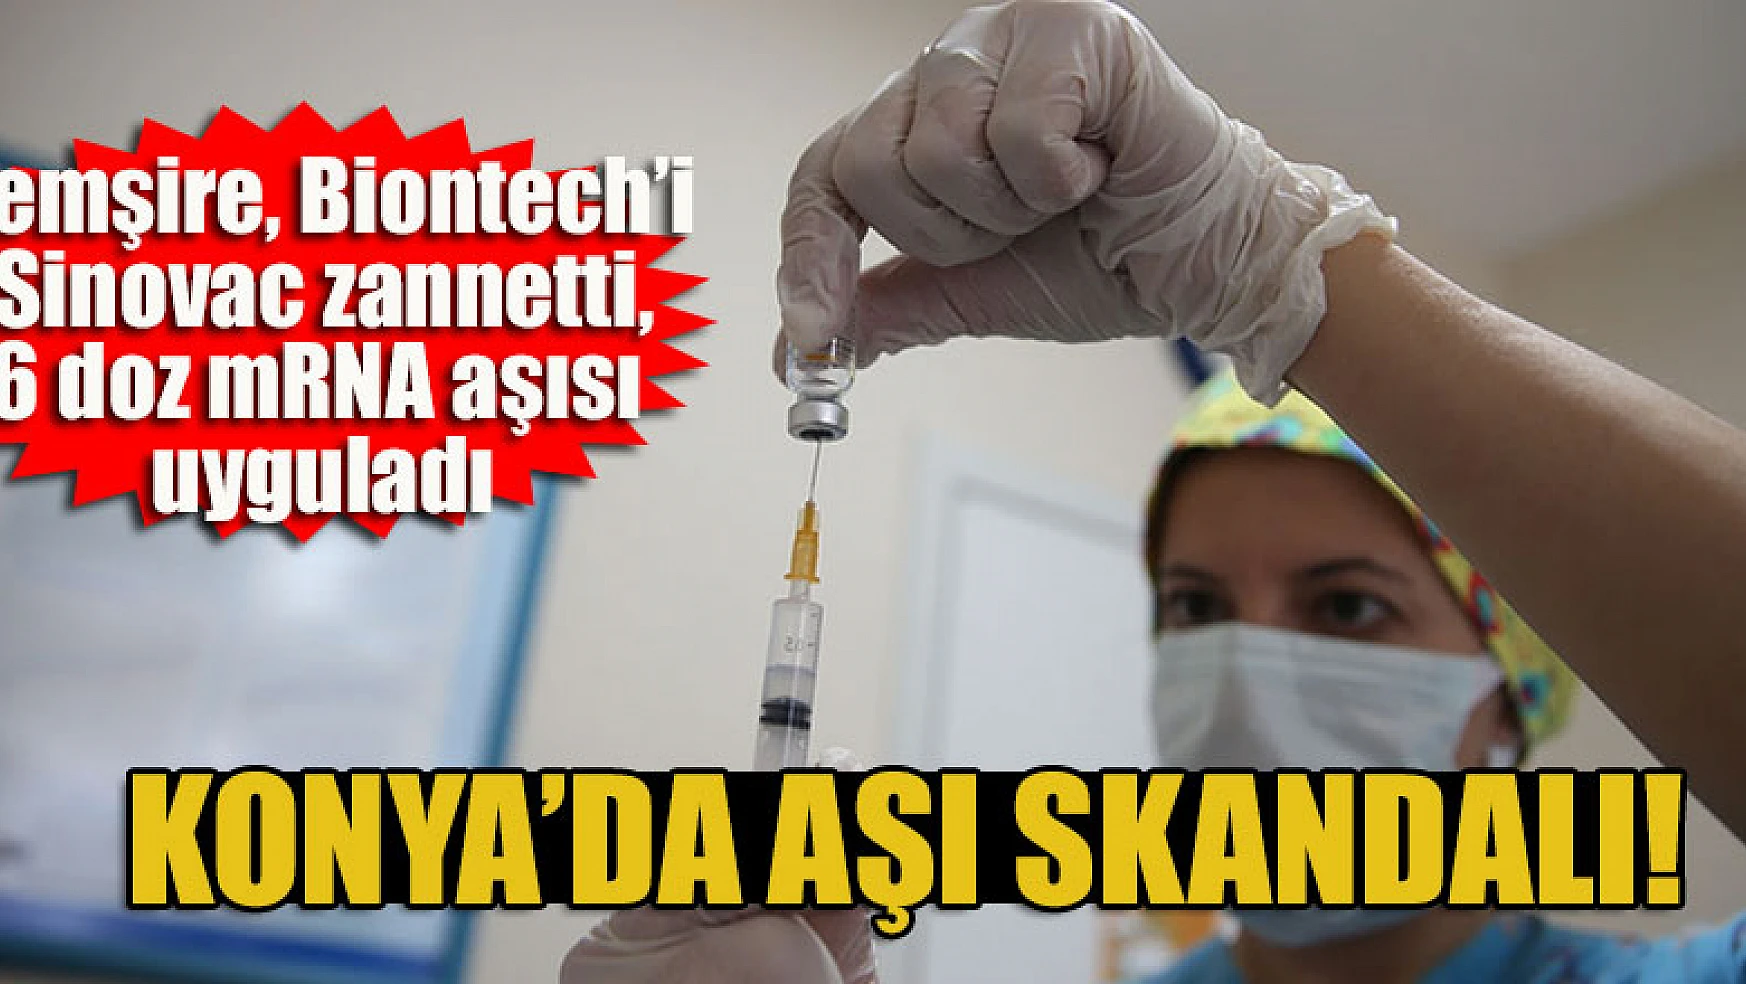 Konya'da aşı skandalı: Hemşire, Biontech'i Sinovac zannetti, hastaya 6 doz mRNA aşısı uyguladı